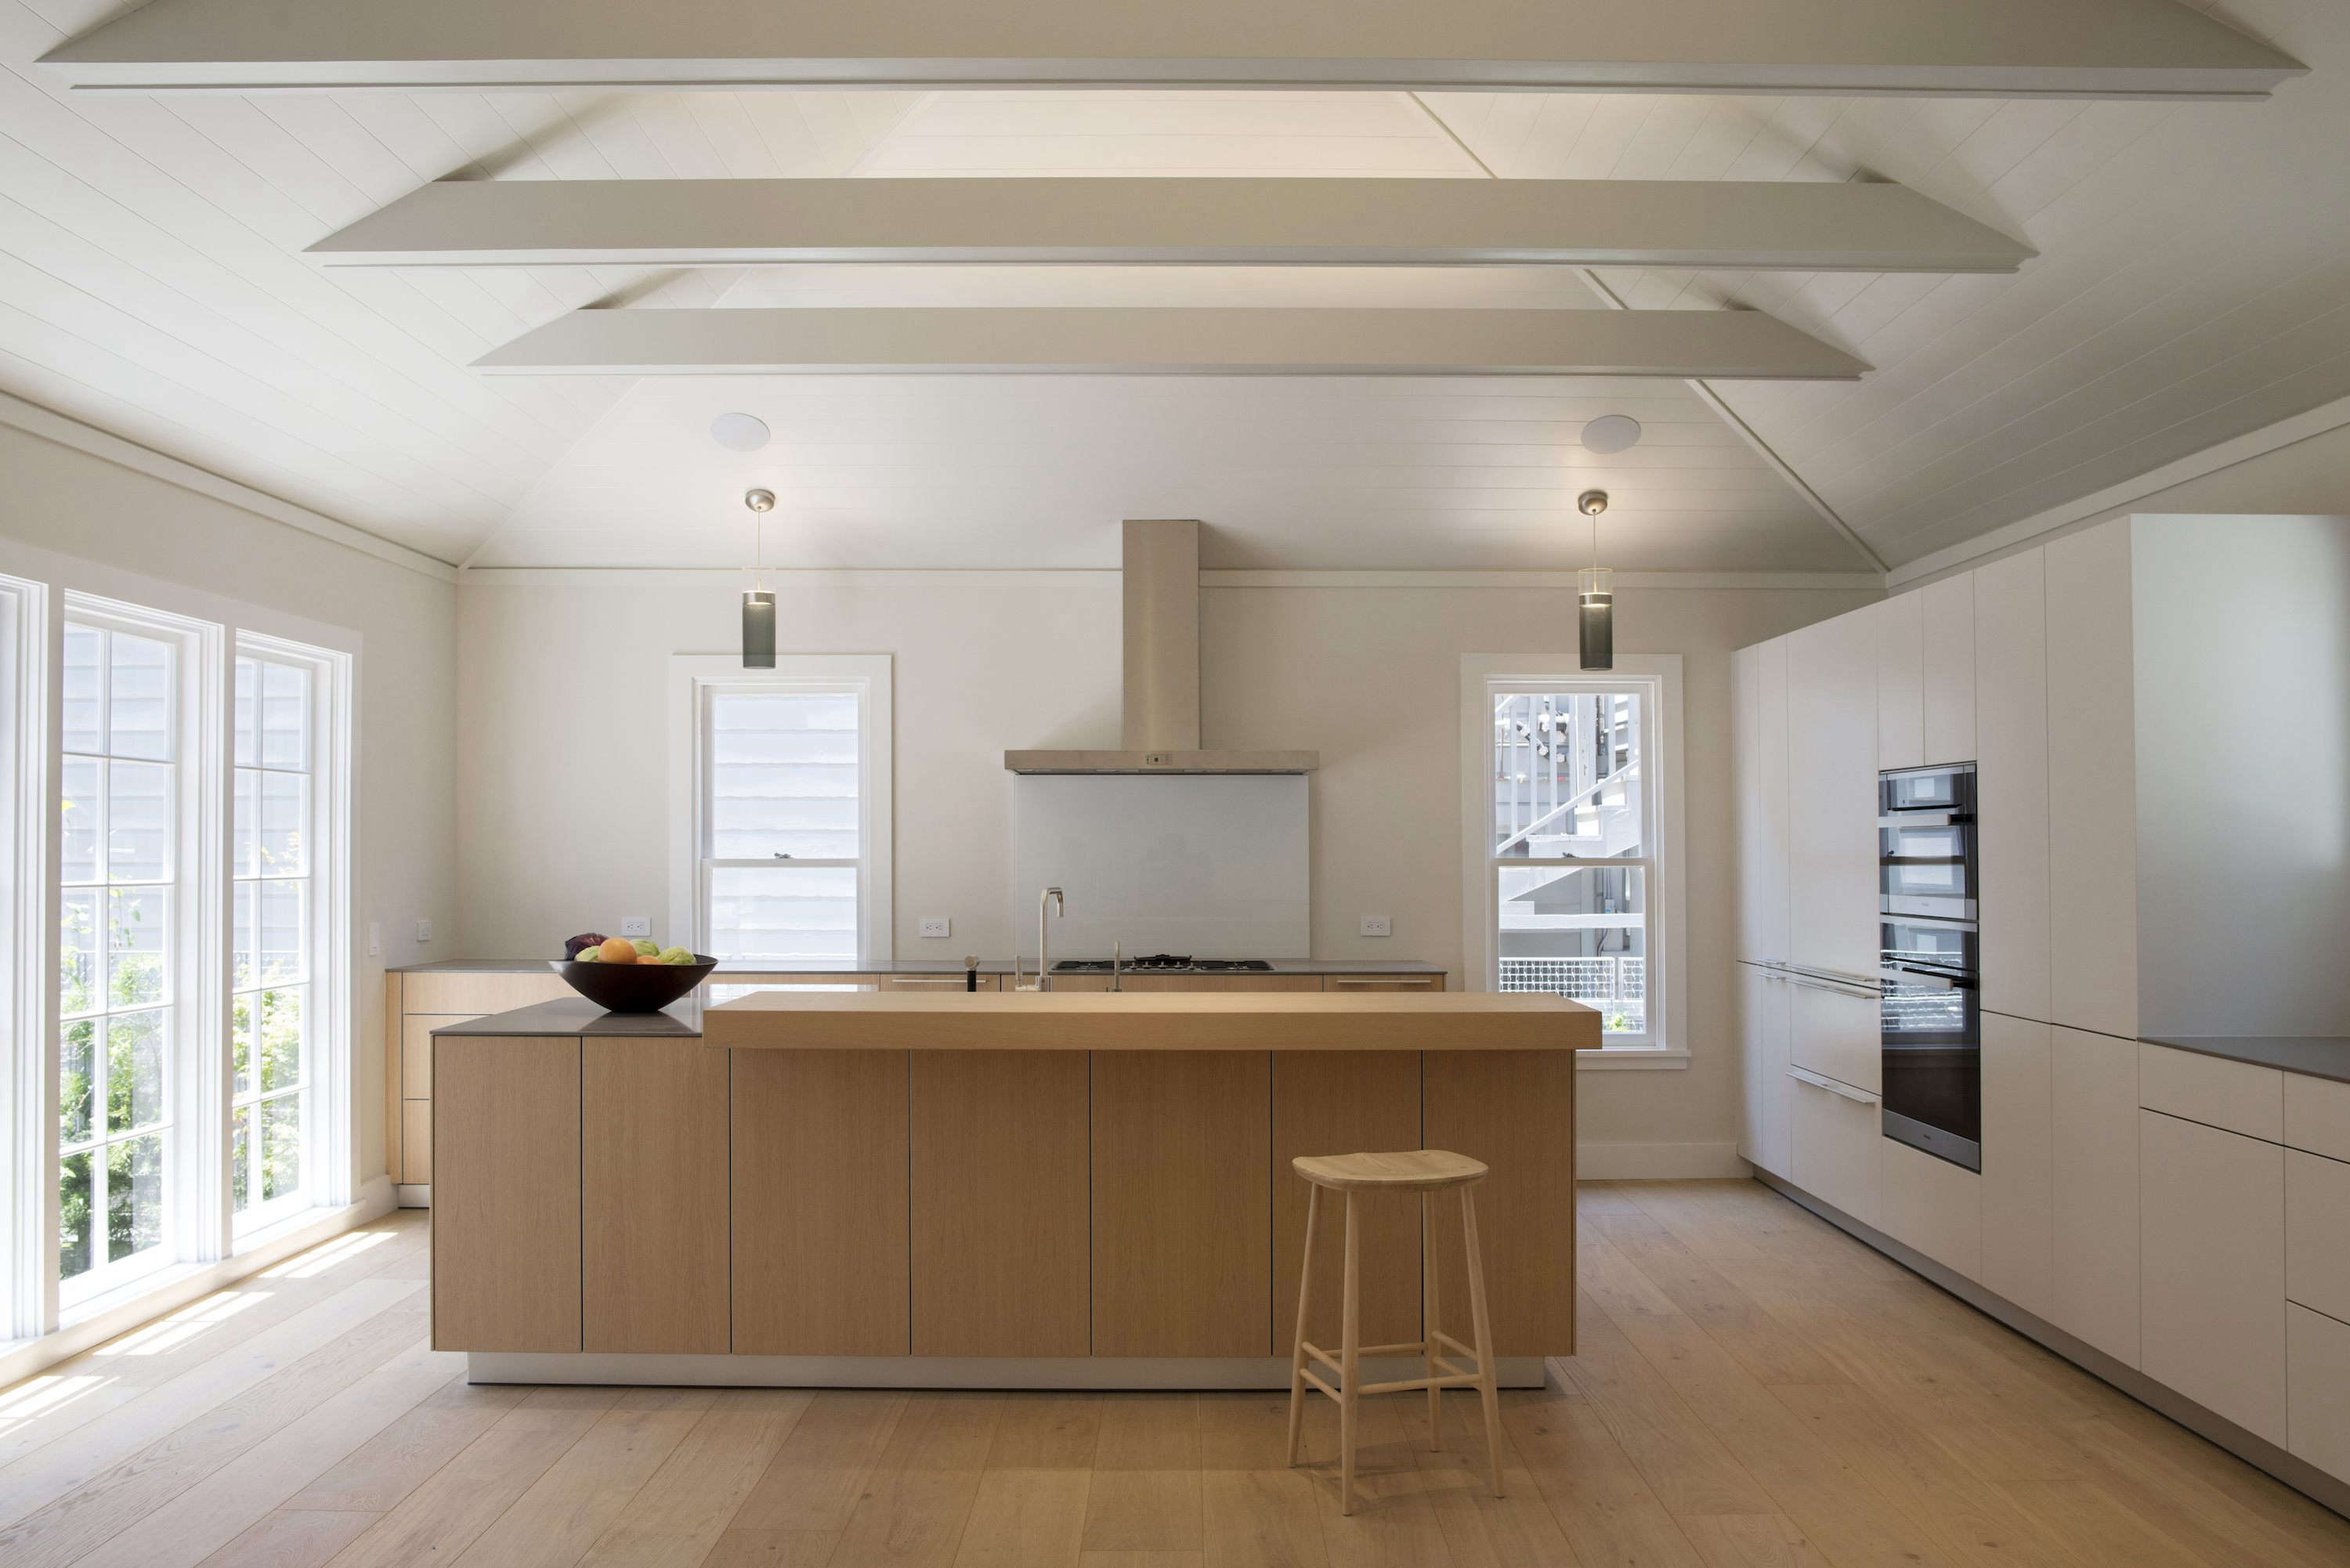 Best Practices for Kitchen Space Design